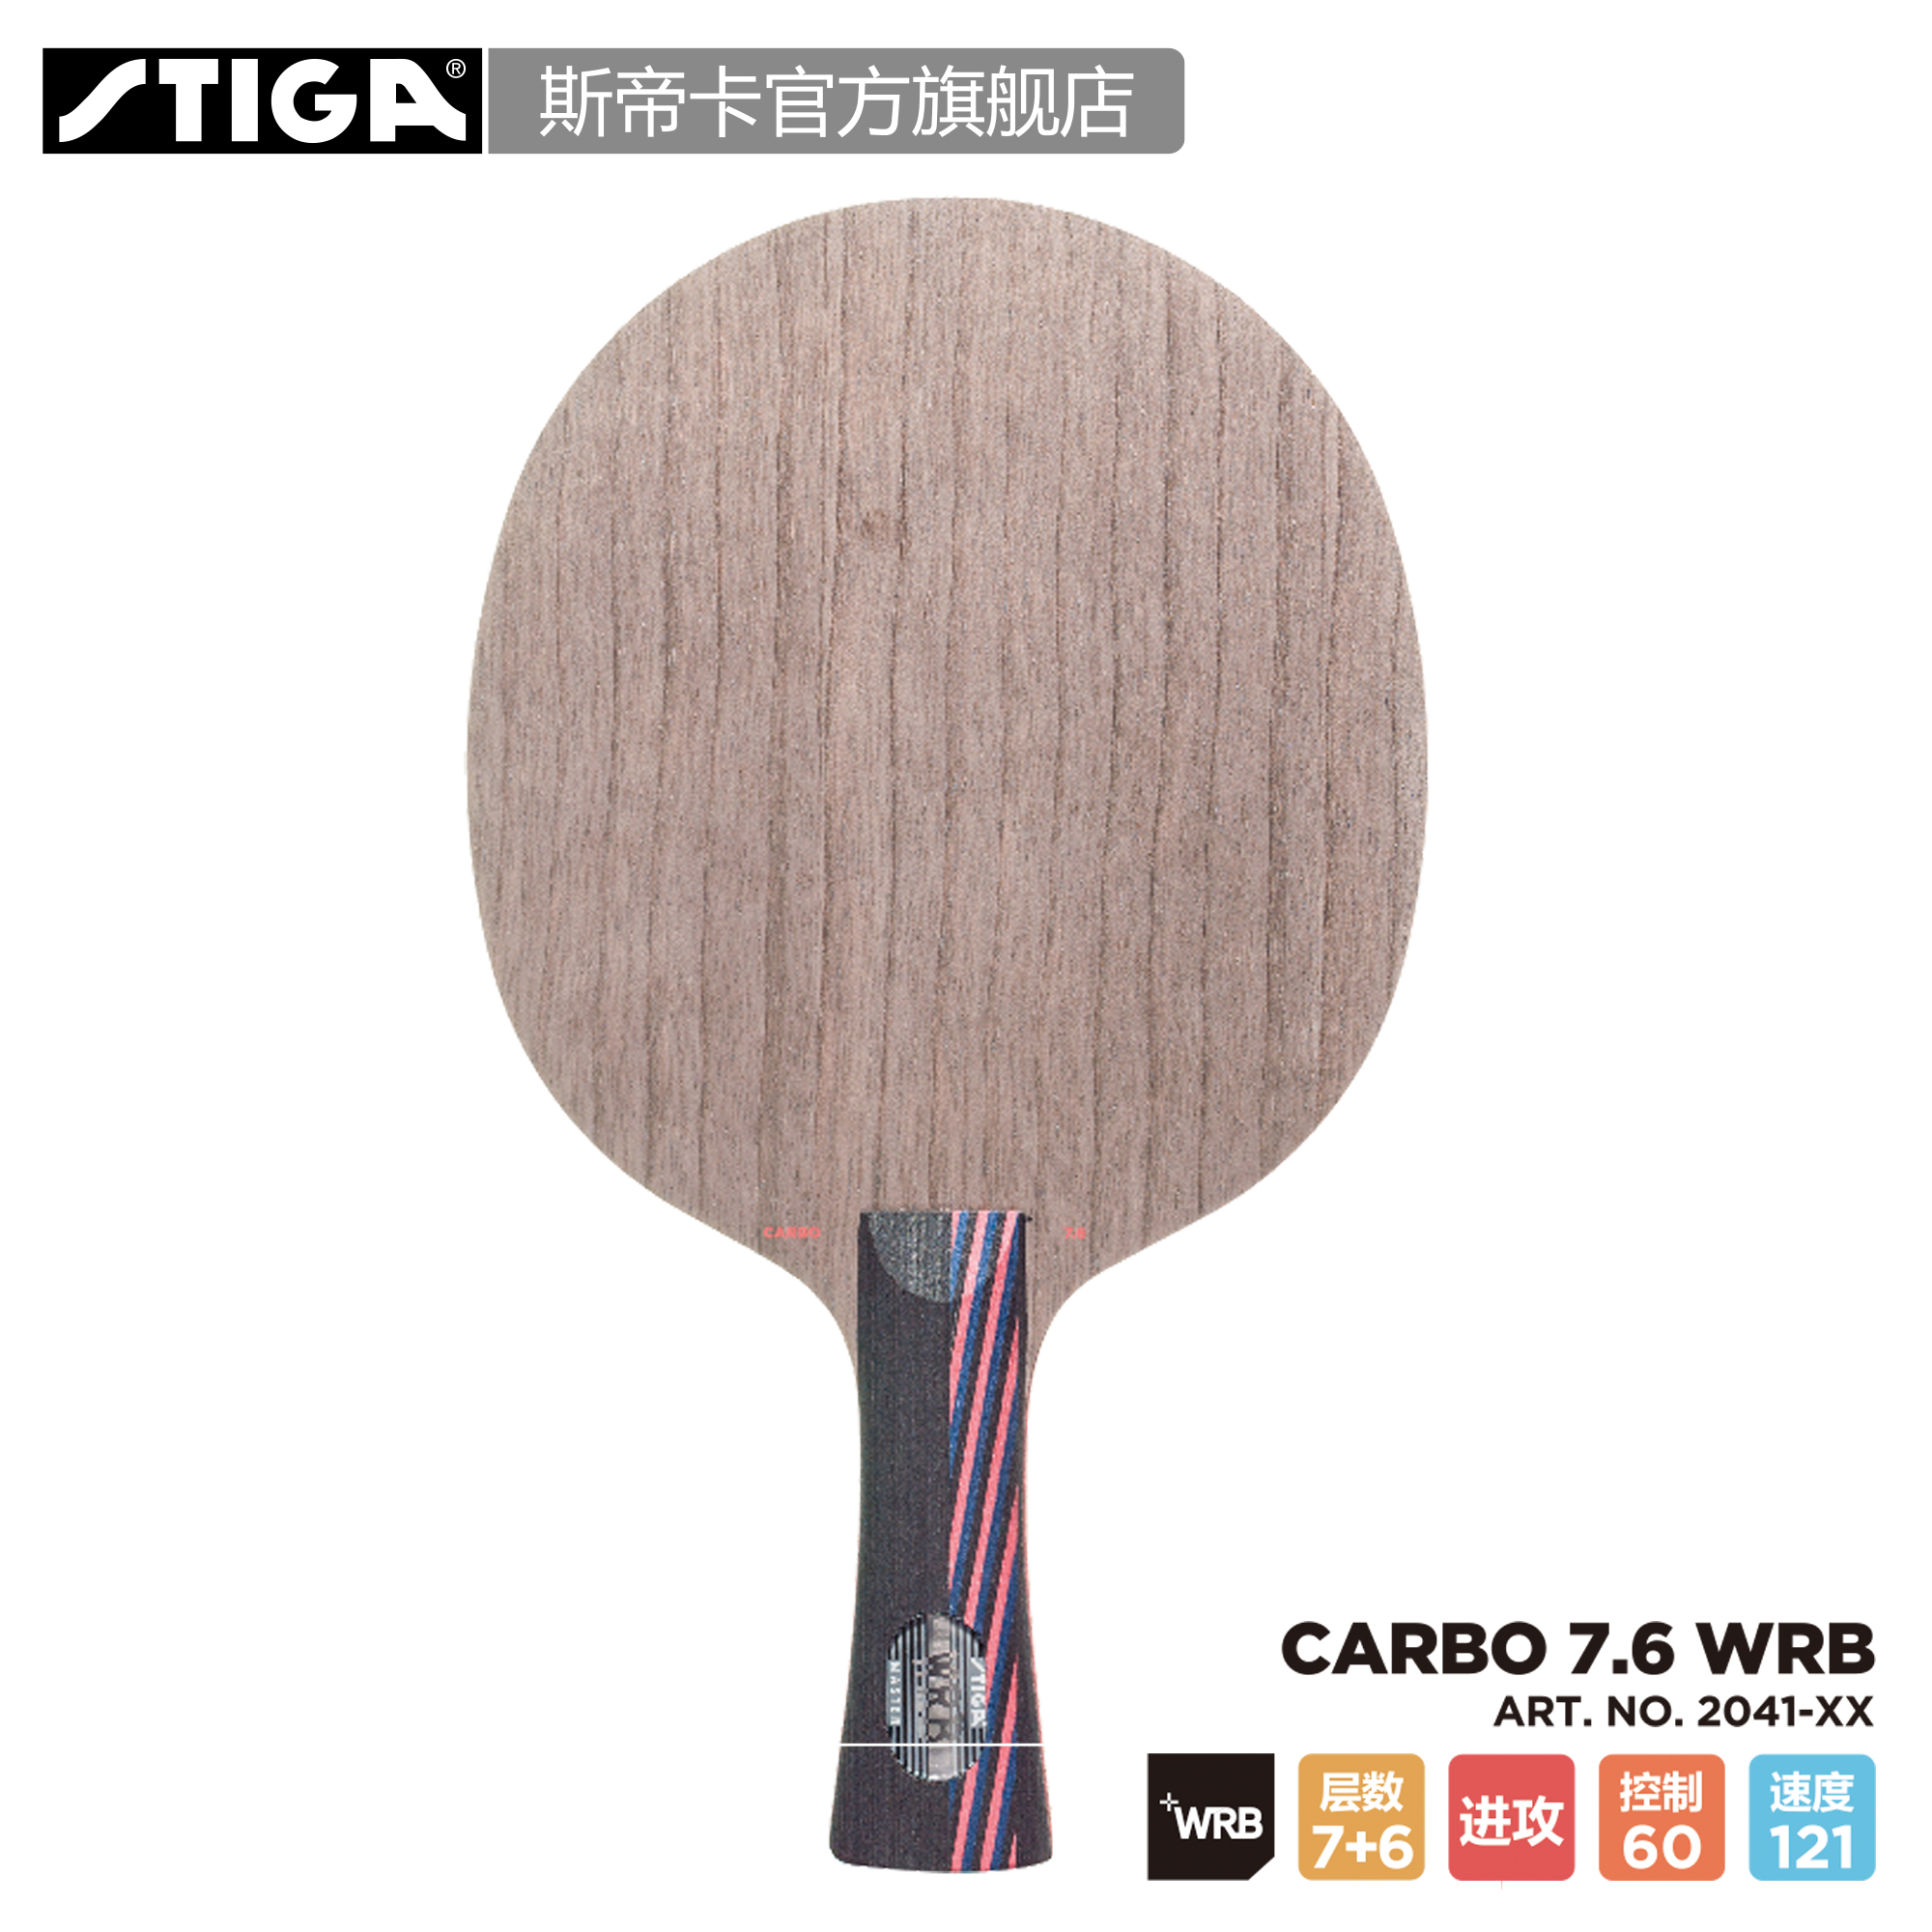 STIGA官方旗舰店 斯帝卡进口底板Carbo 7.6 WRB红黑碳王7.6WRB